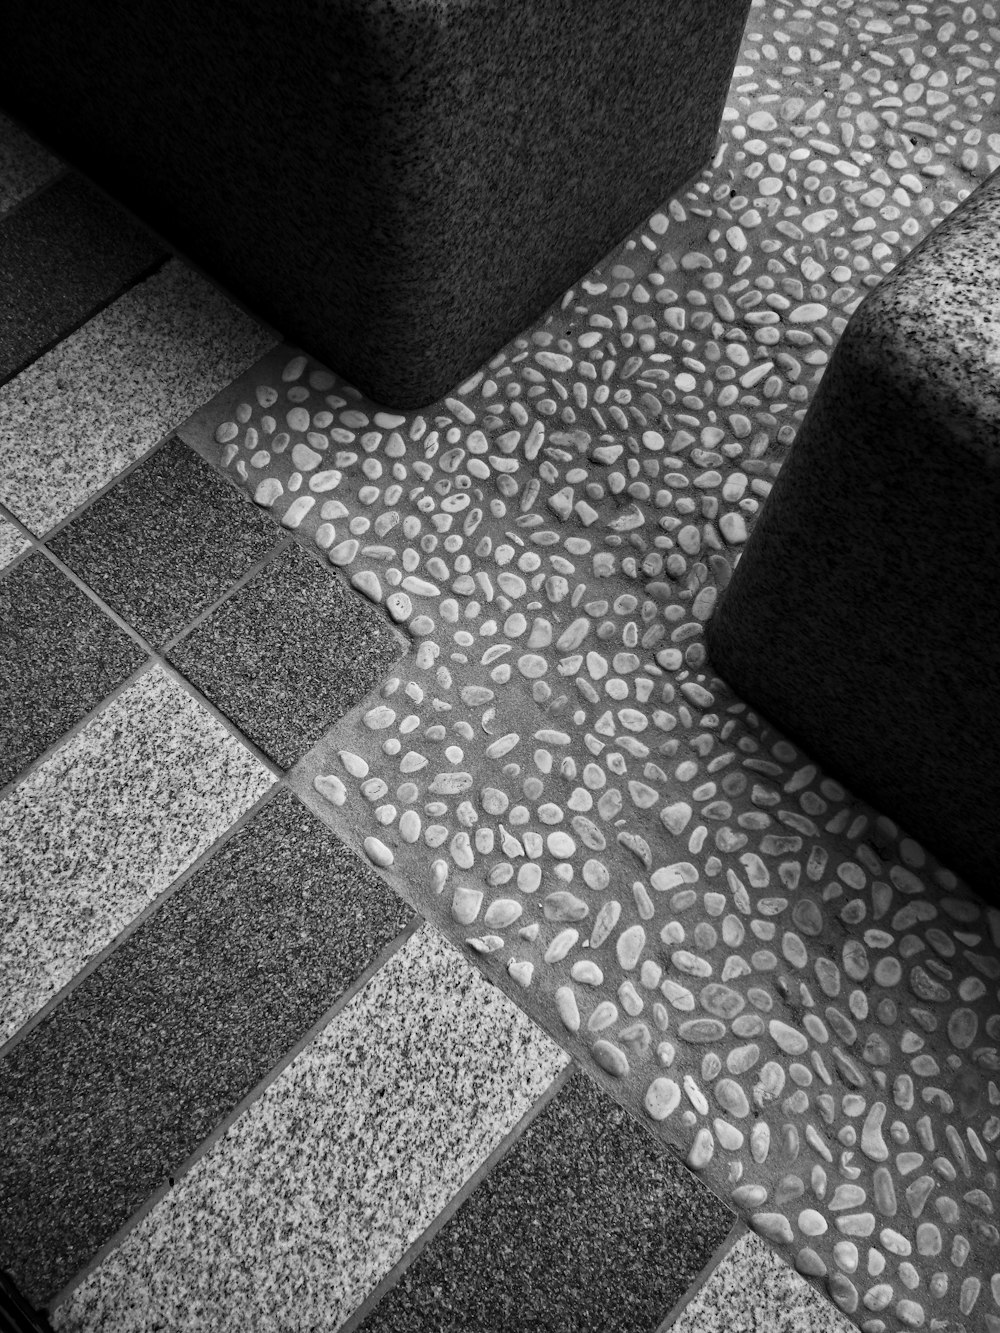 black and white checkered floor tiles